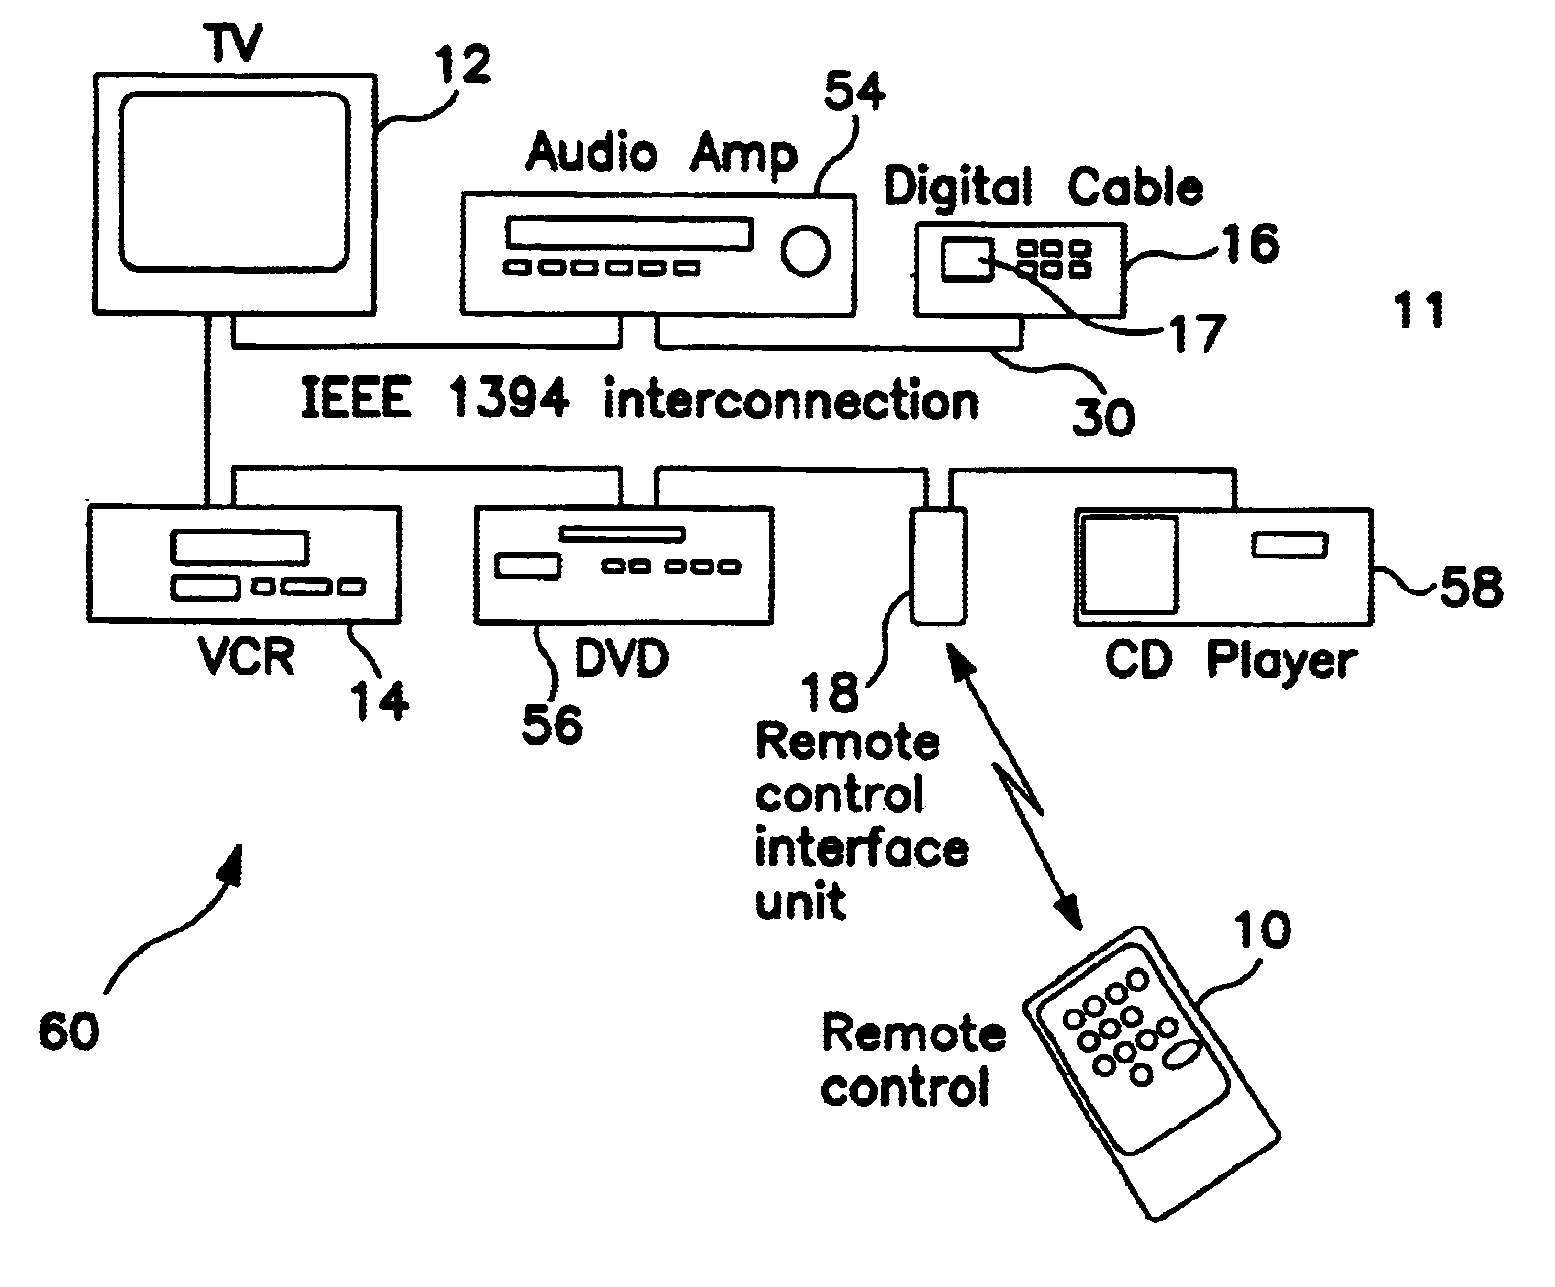 Digital interconnect of entertainment equipment